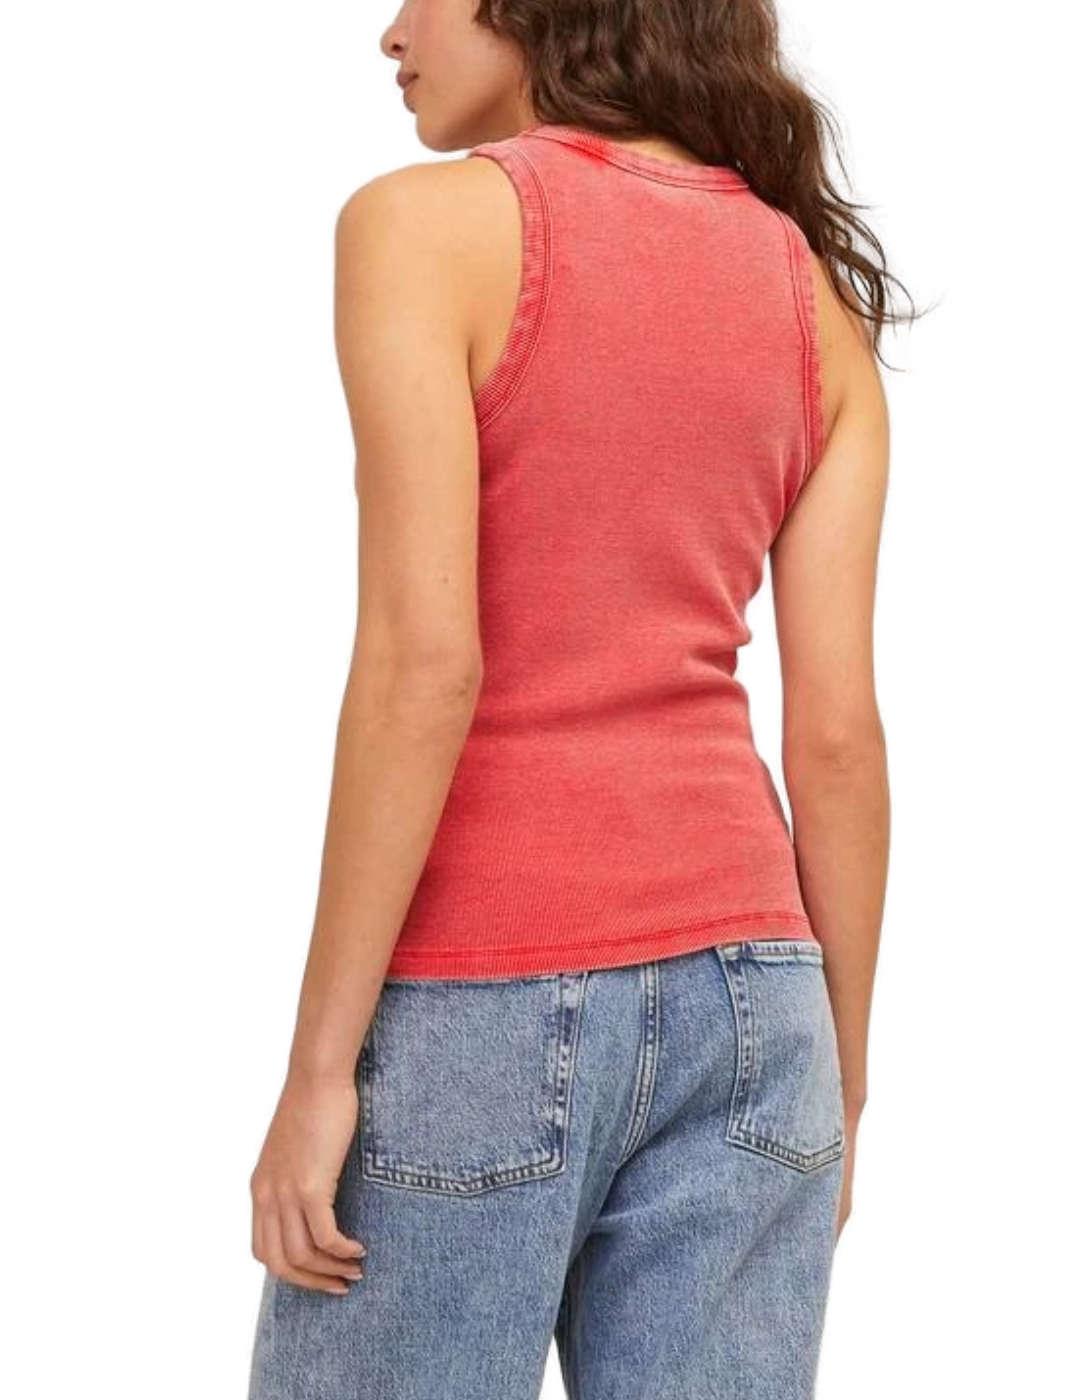 Camiseta JJXX Forest rojo tirantes ajustada para mujer